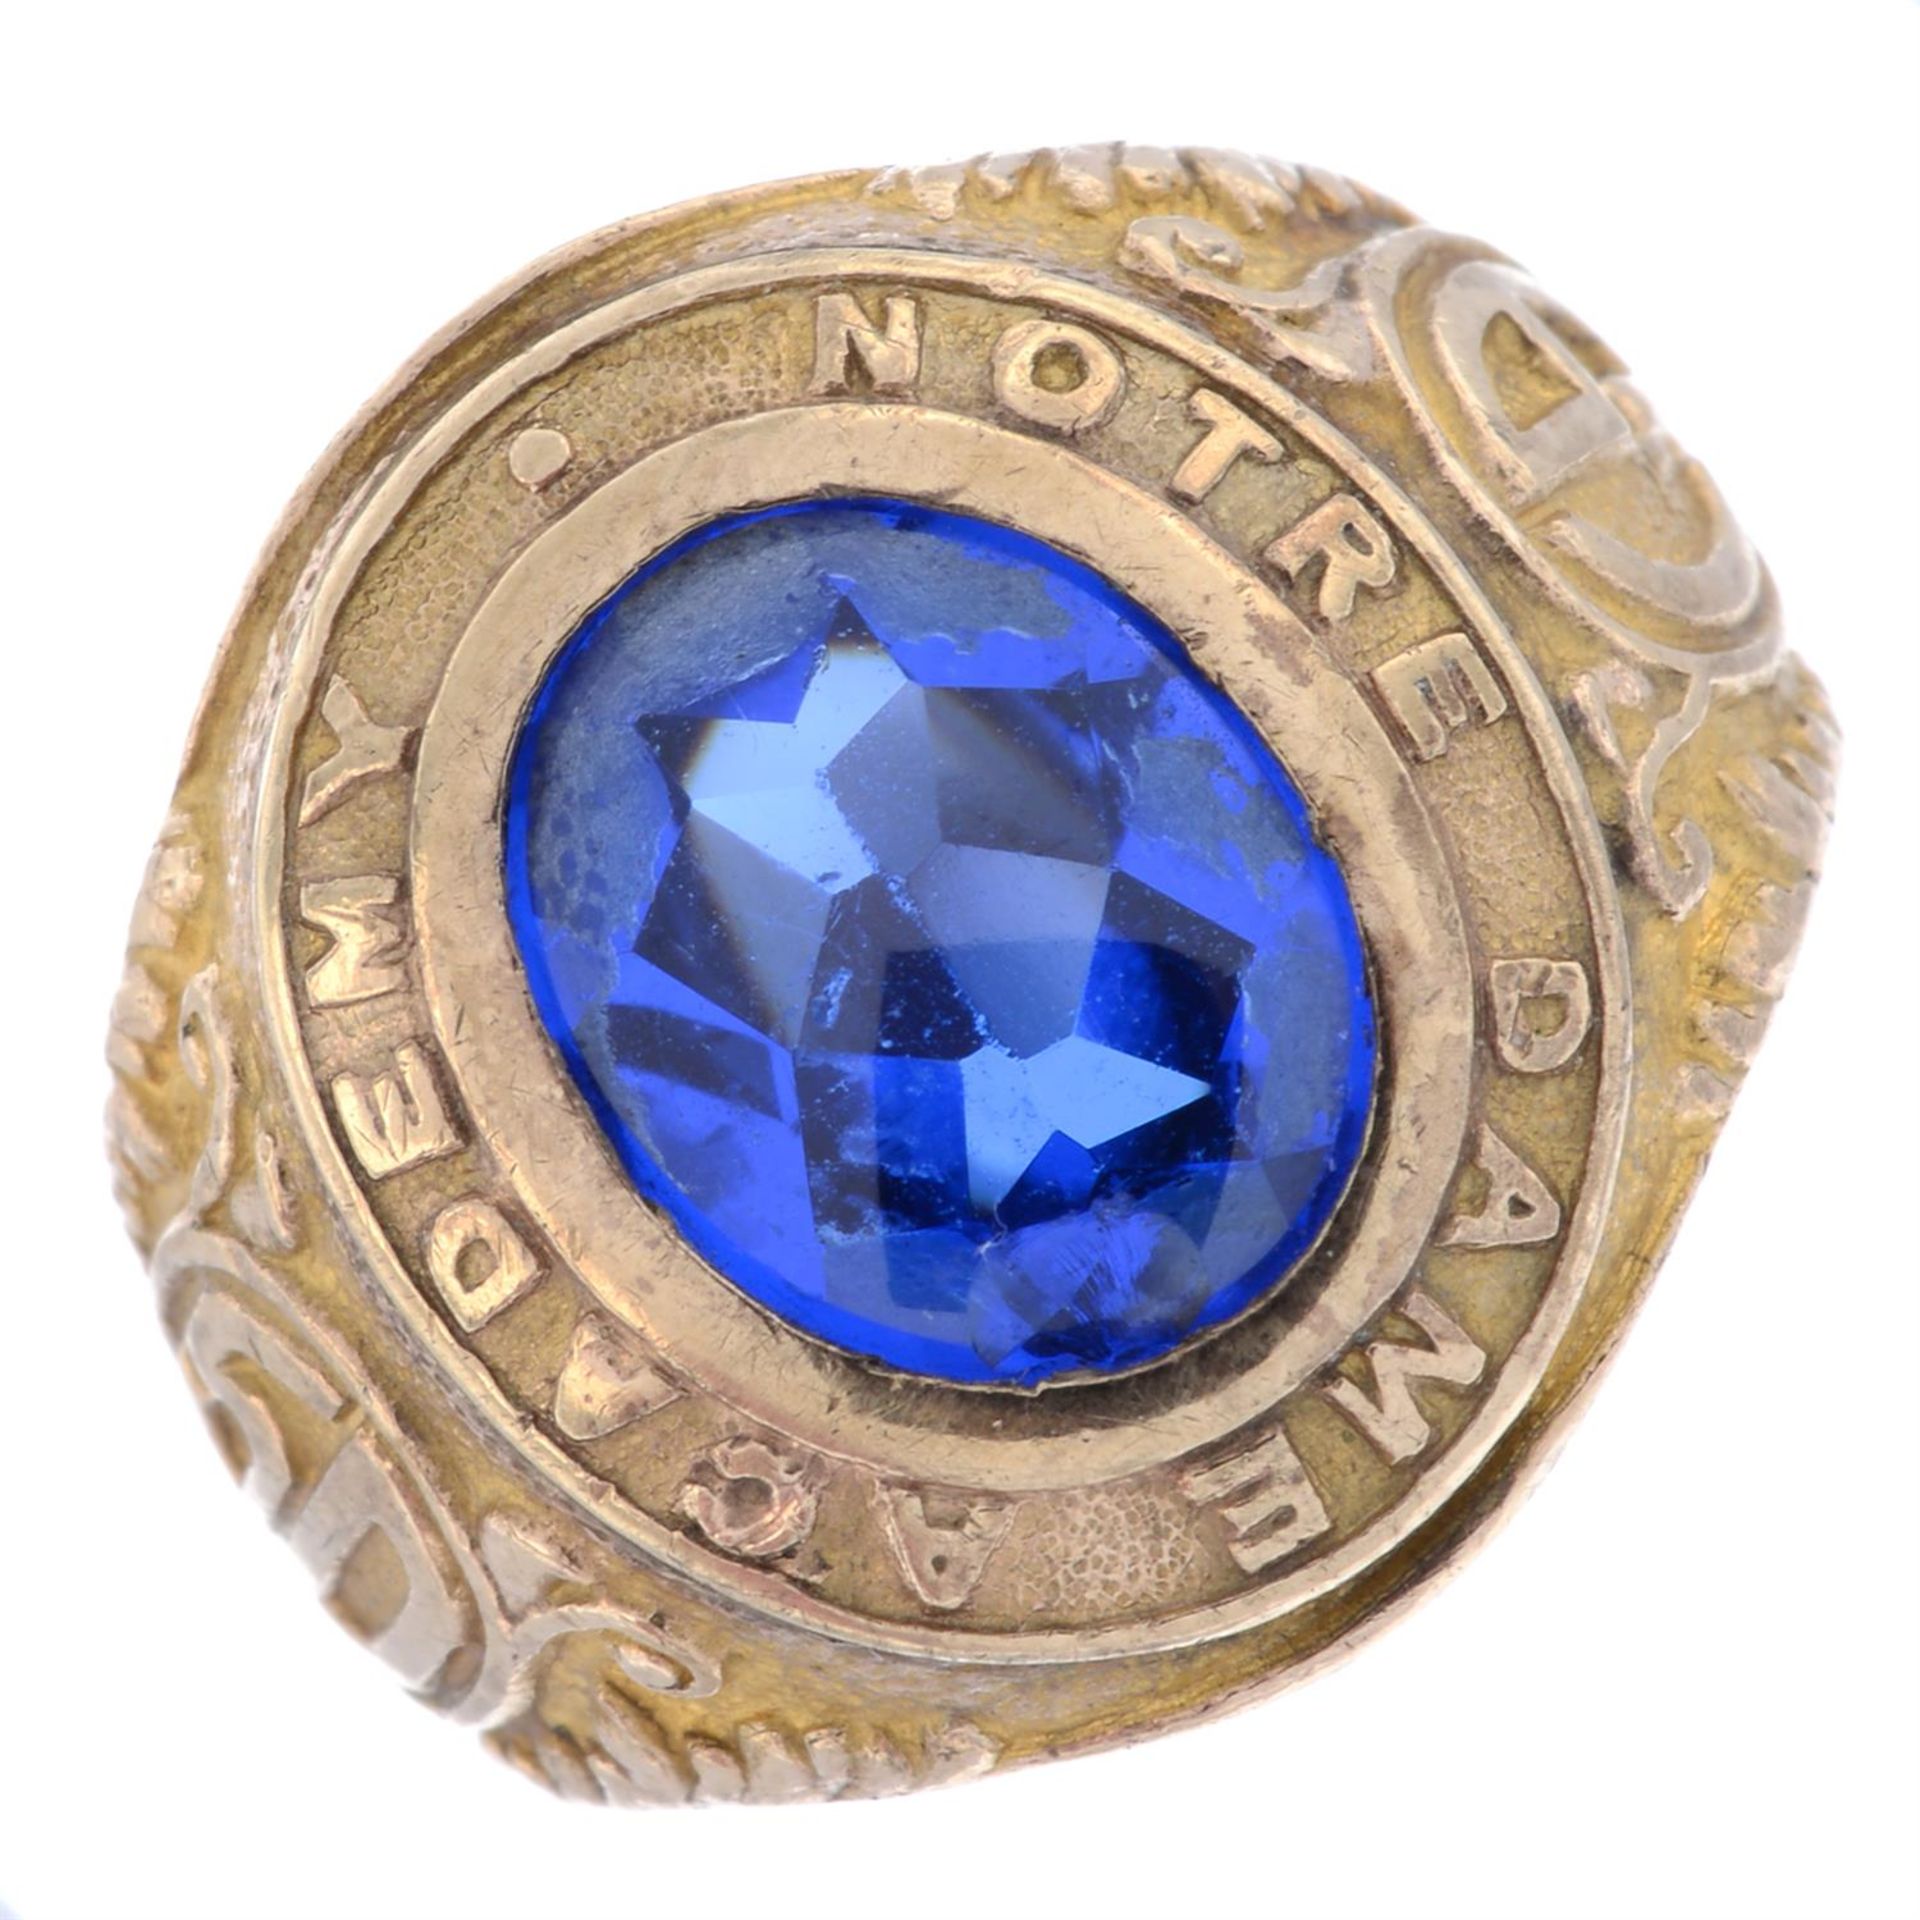 Blue paste 'Notre Dame Academy' graduation ring